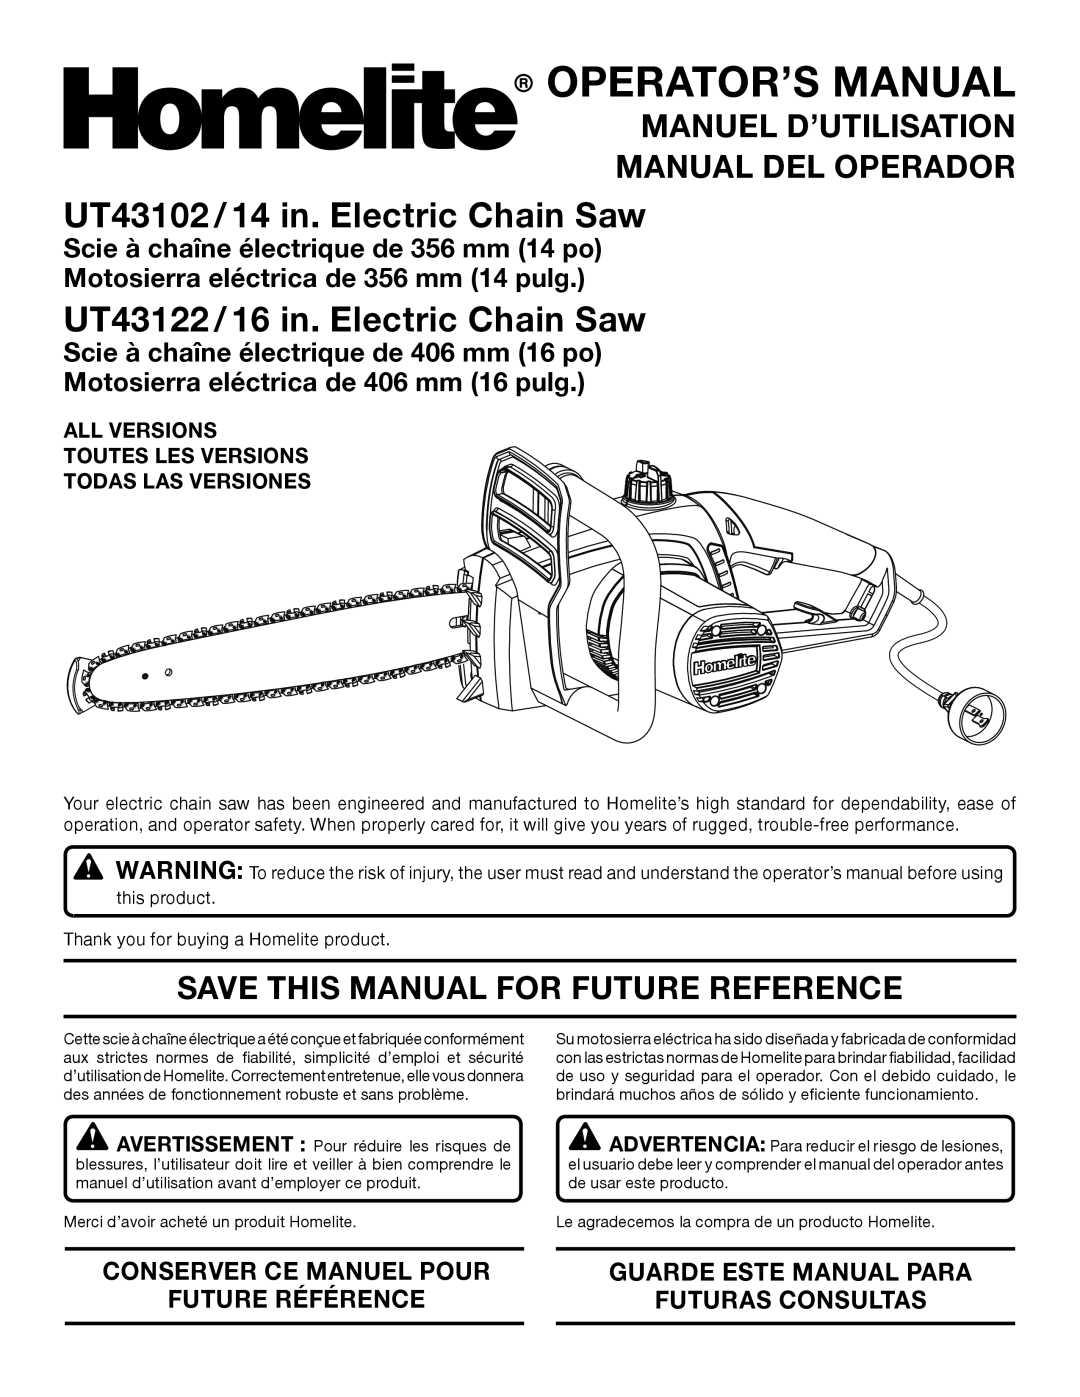 Homelite manuel dutilisation UT43102 / 14 in. Electric Chain Saw, UT43122 / 16 in. Electric Chain Saw, Future Référence 